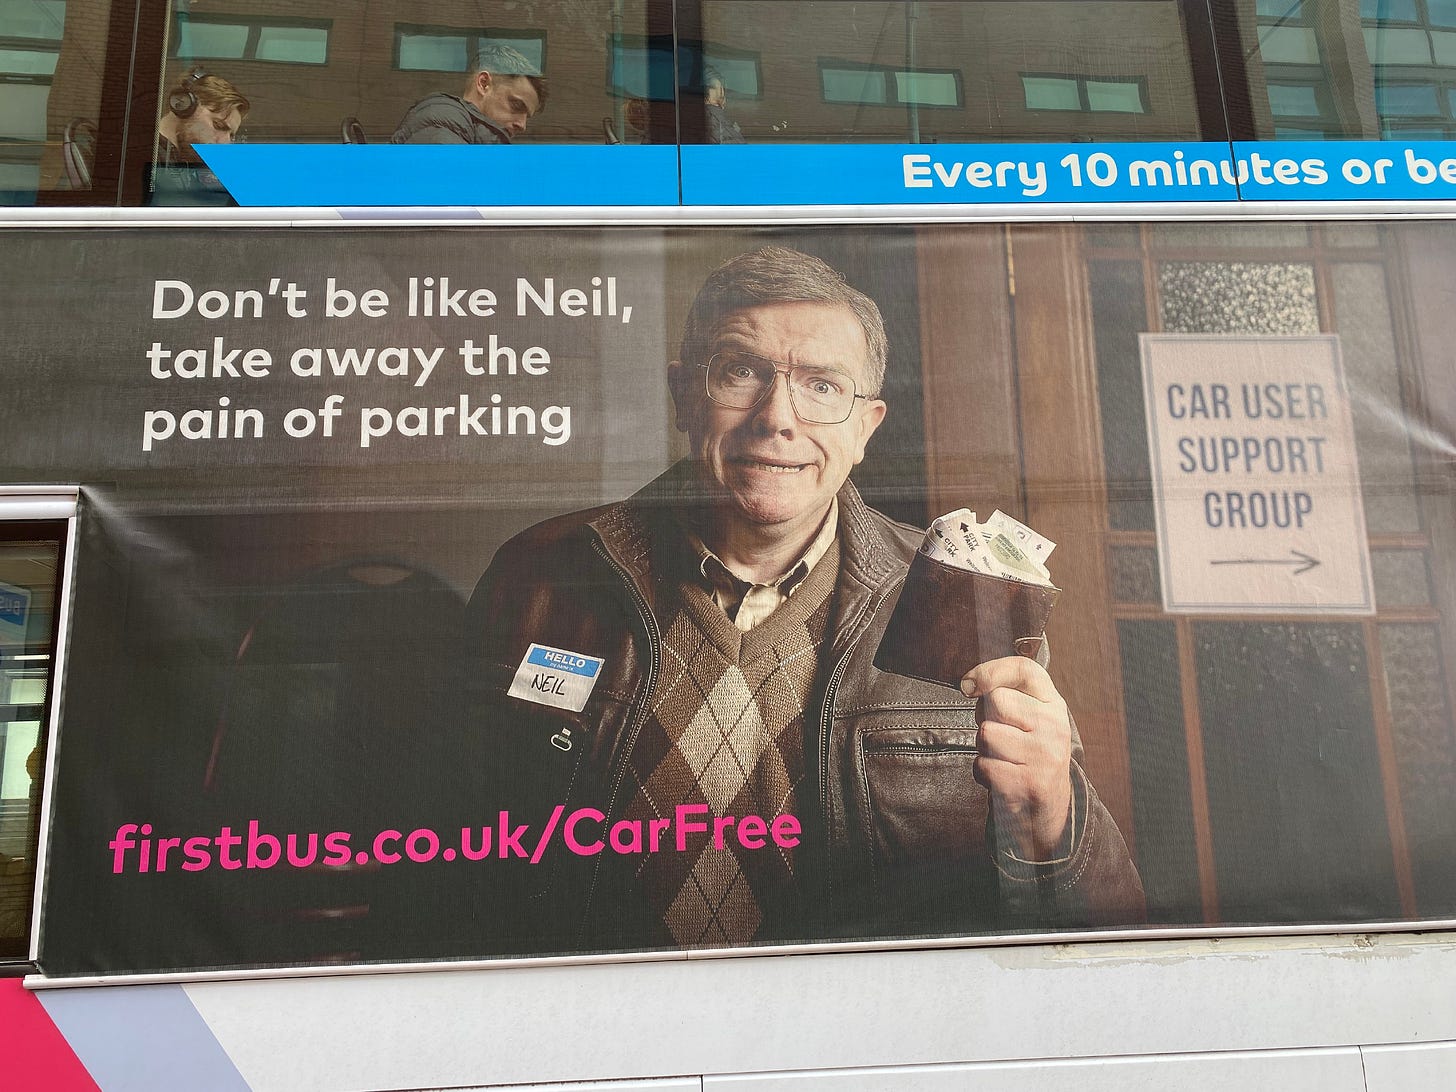 Uncool car user named Neil